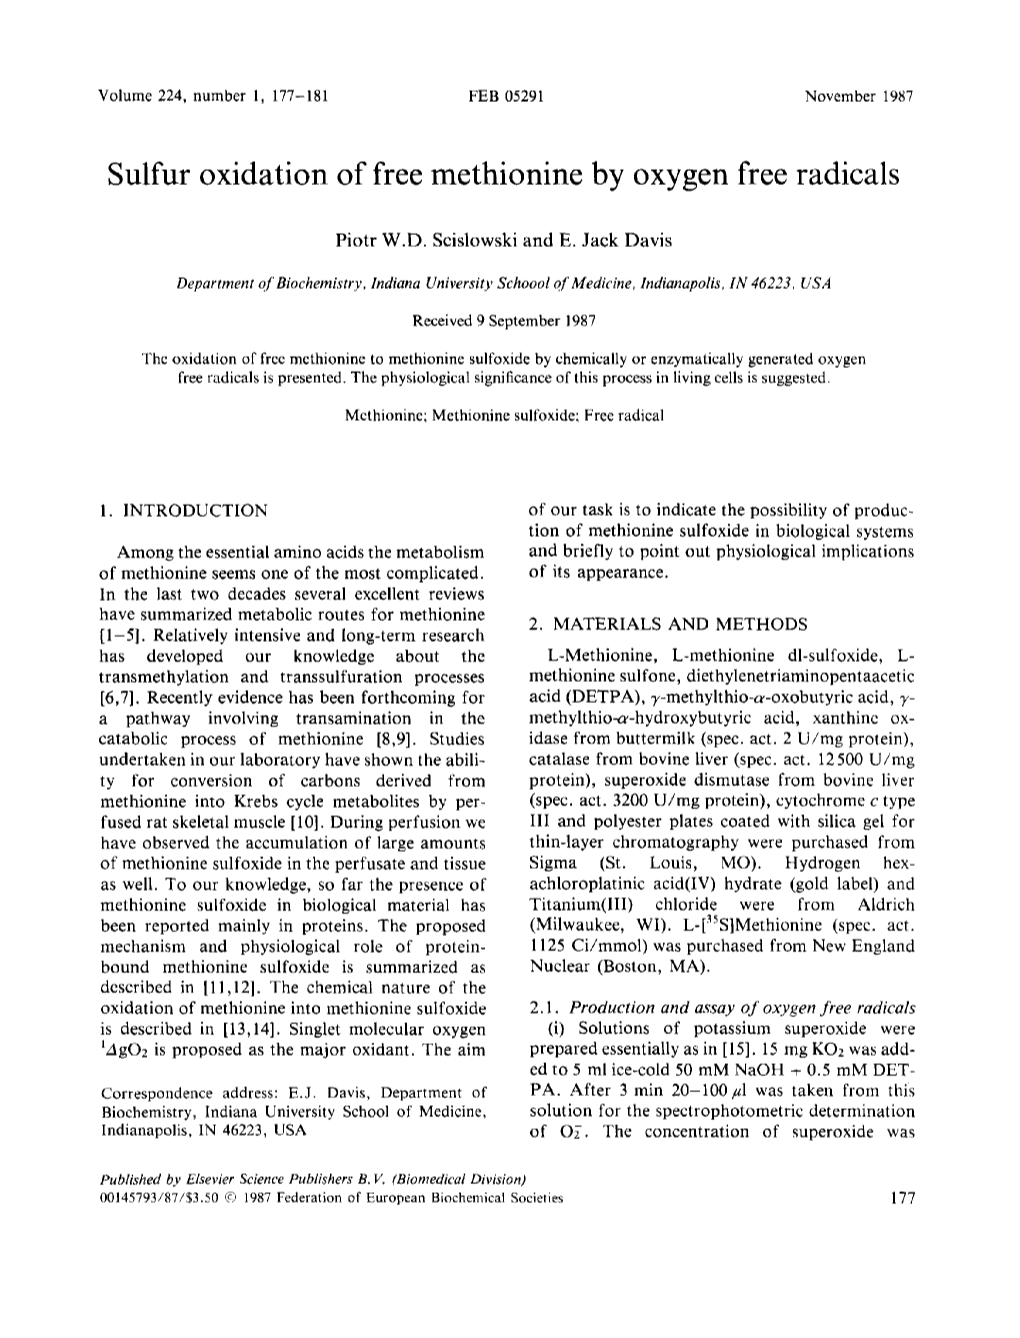 Sulfur Oxidation of Free Methionine by Oxygen Free Radicals